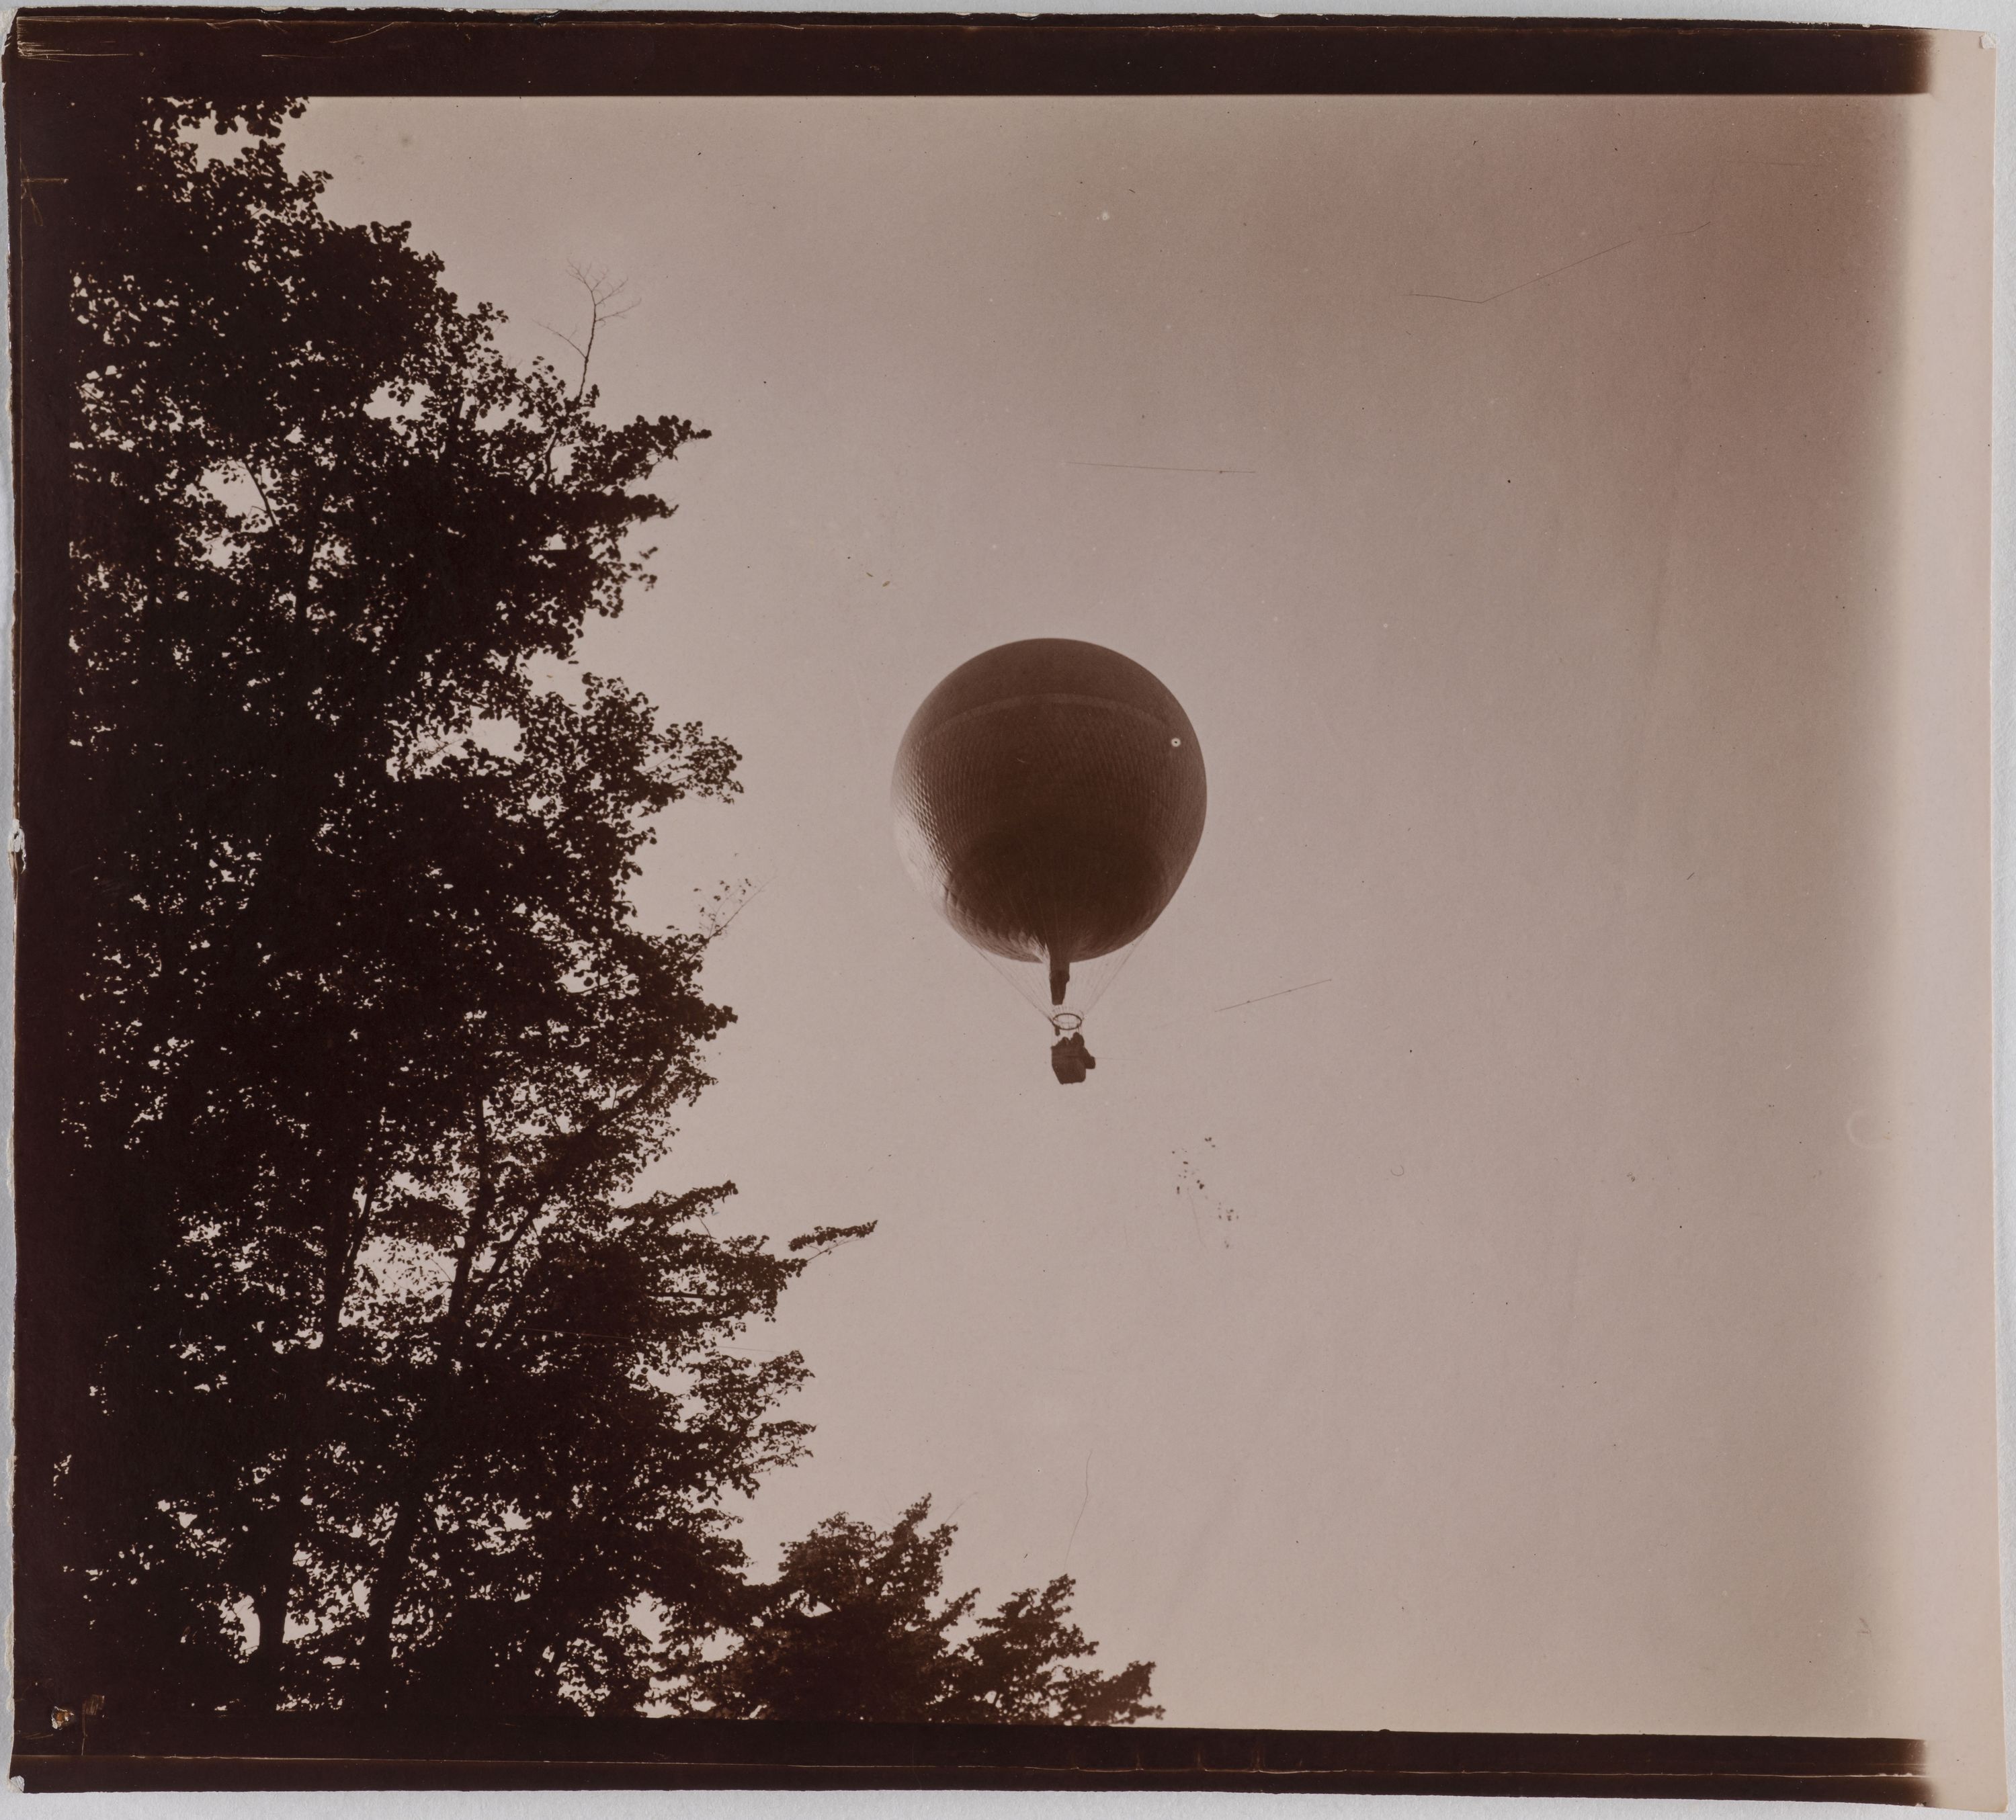 File:Ballon volant dans le ciel. PH19088.jpg - Wikimedia Commons